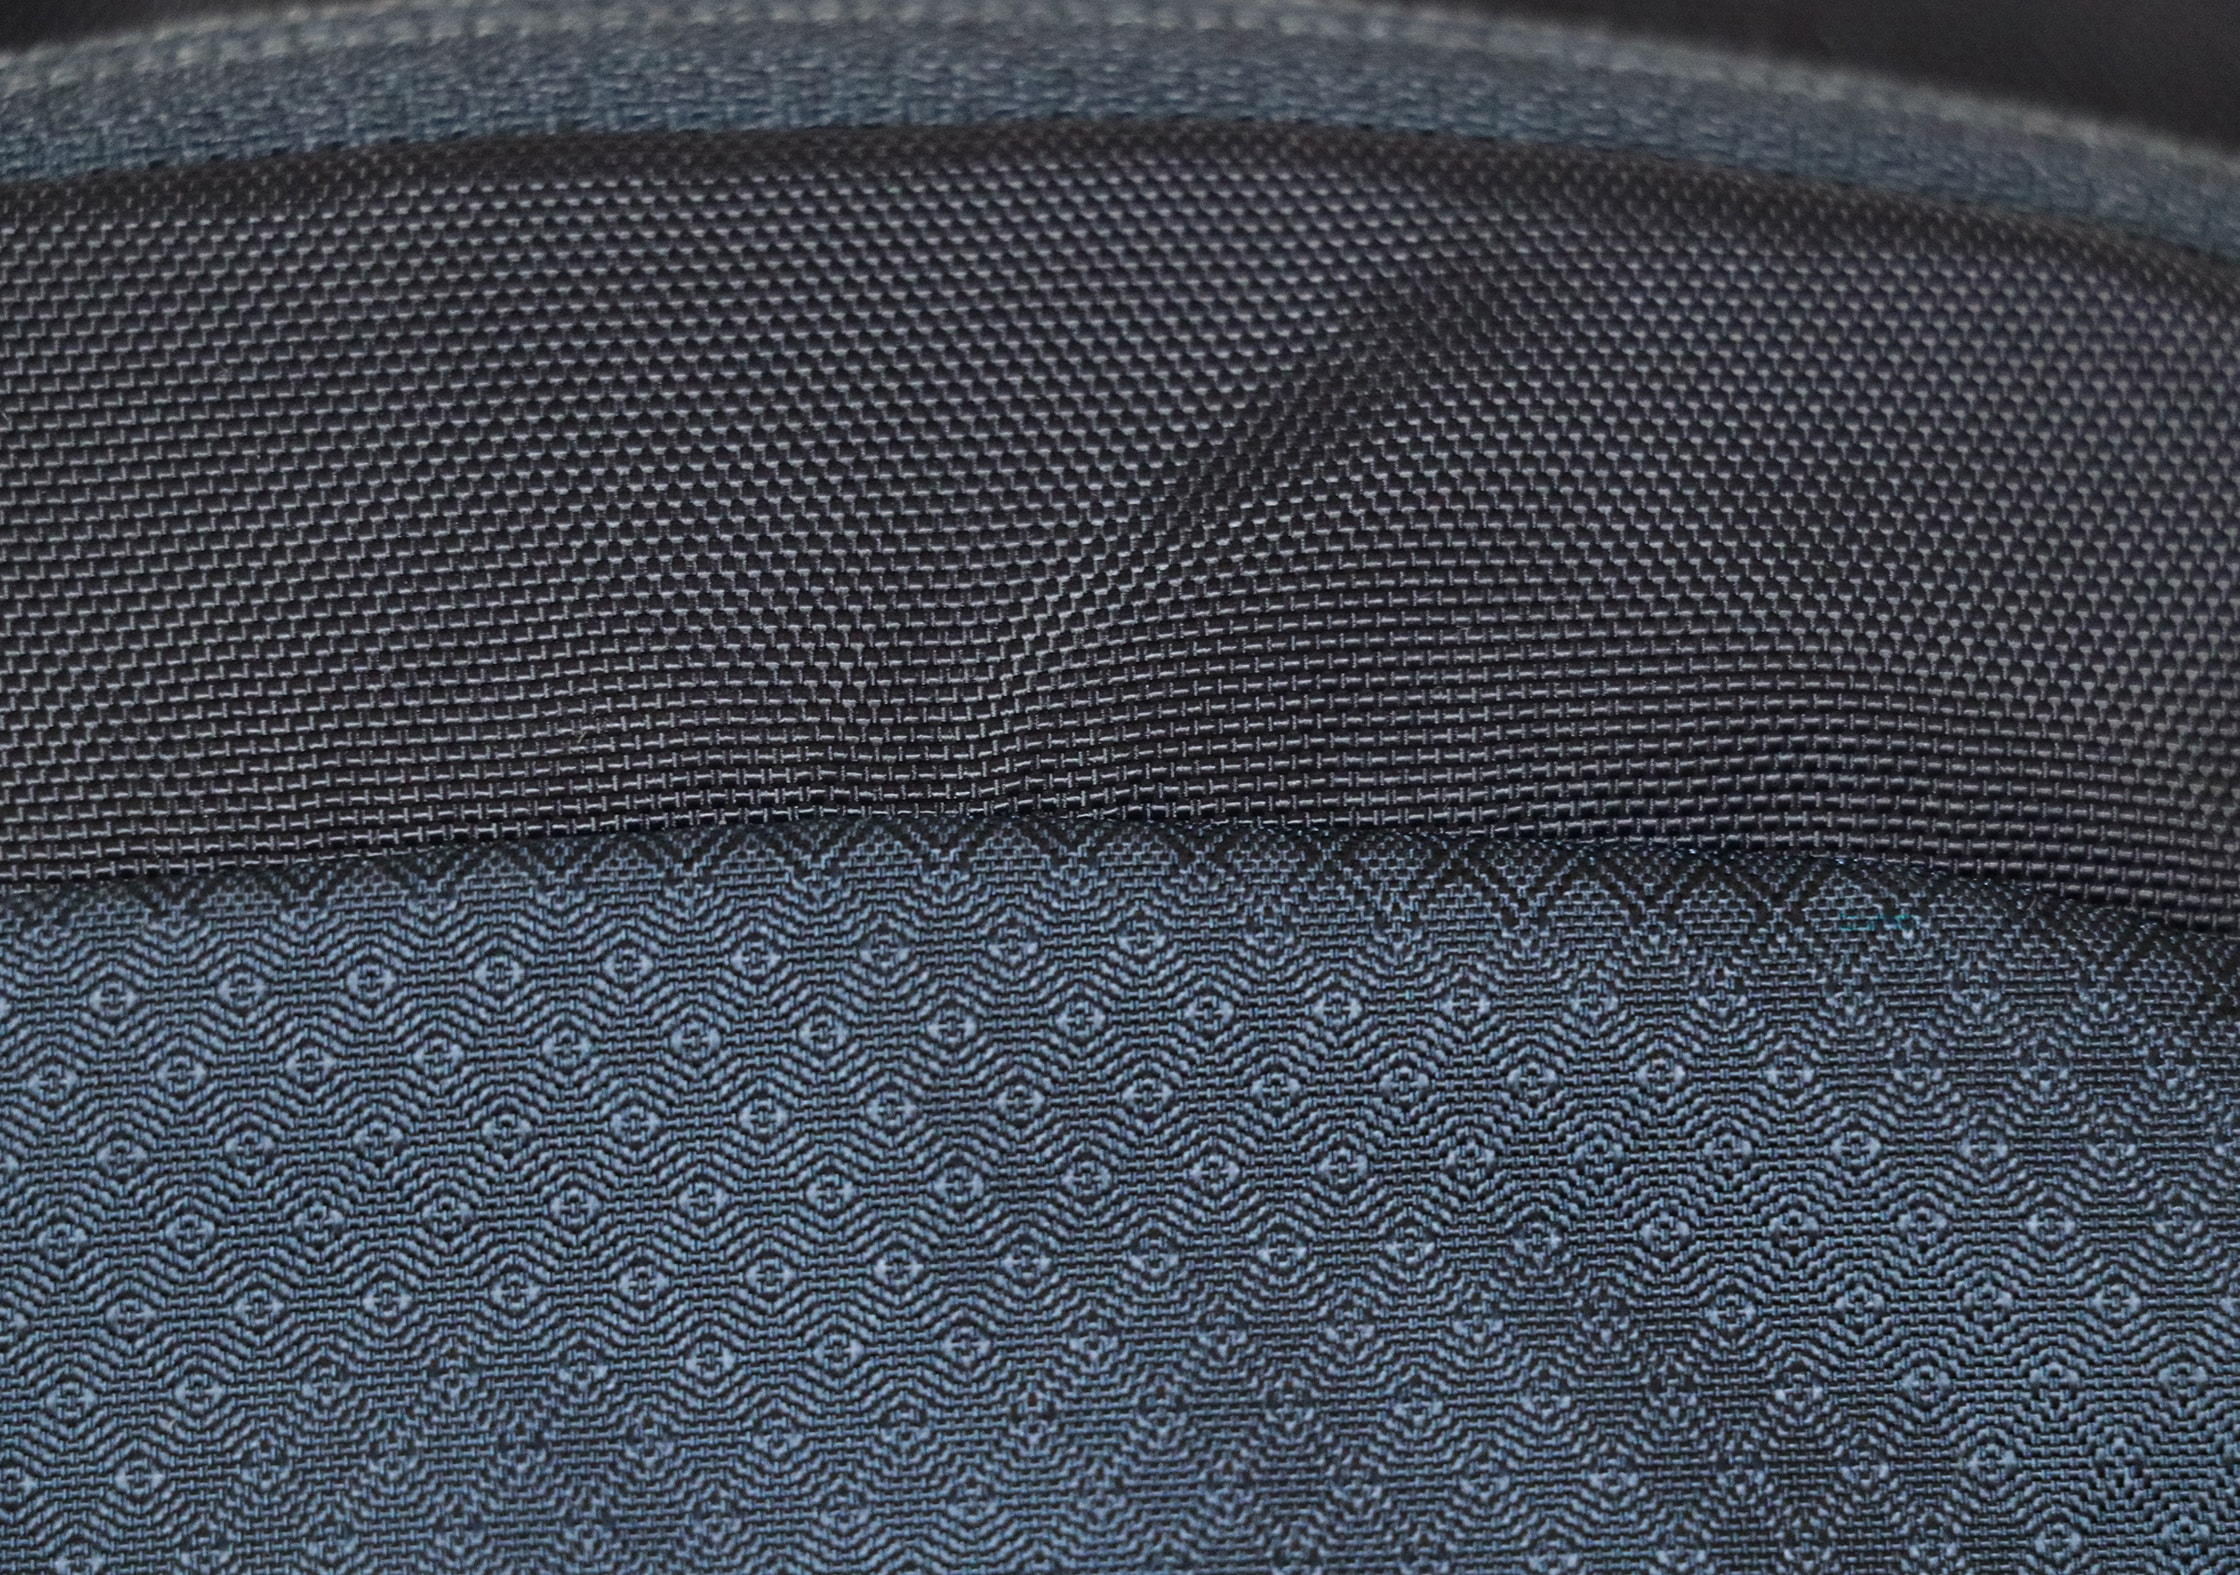 210D Nylon Oxford Fabric On The Osprey Daylite